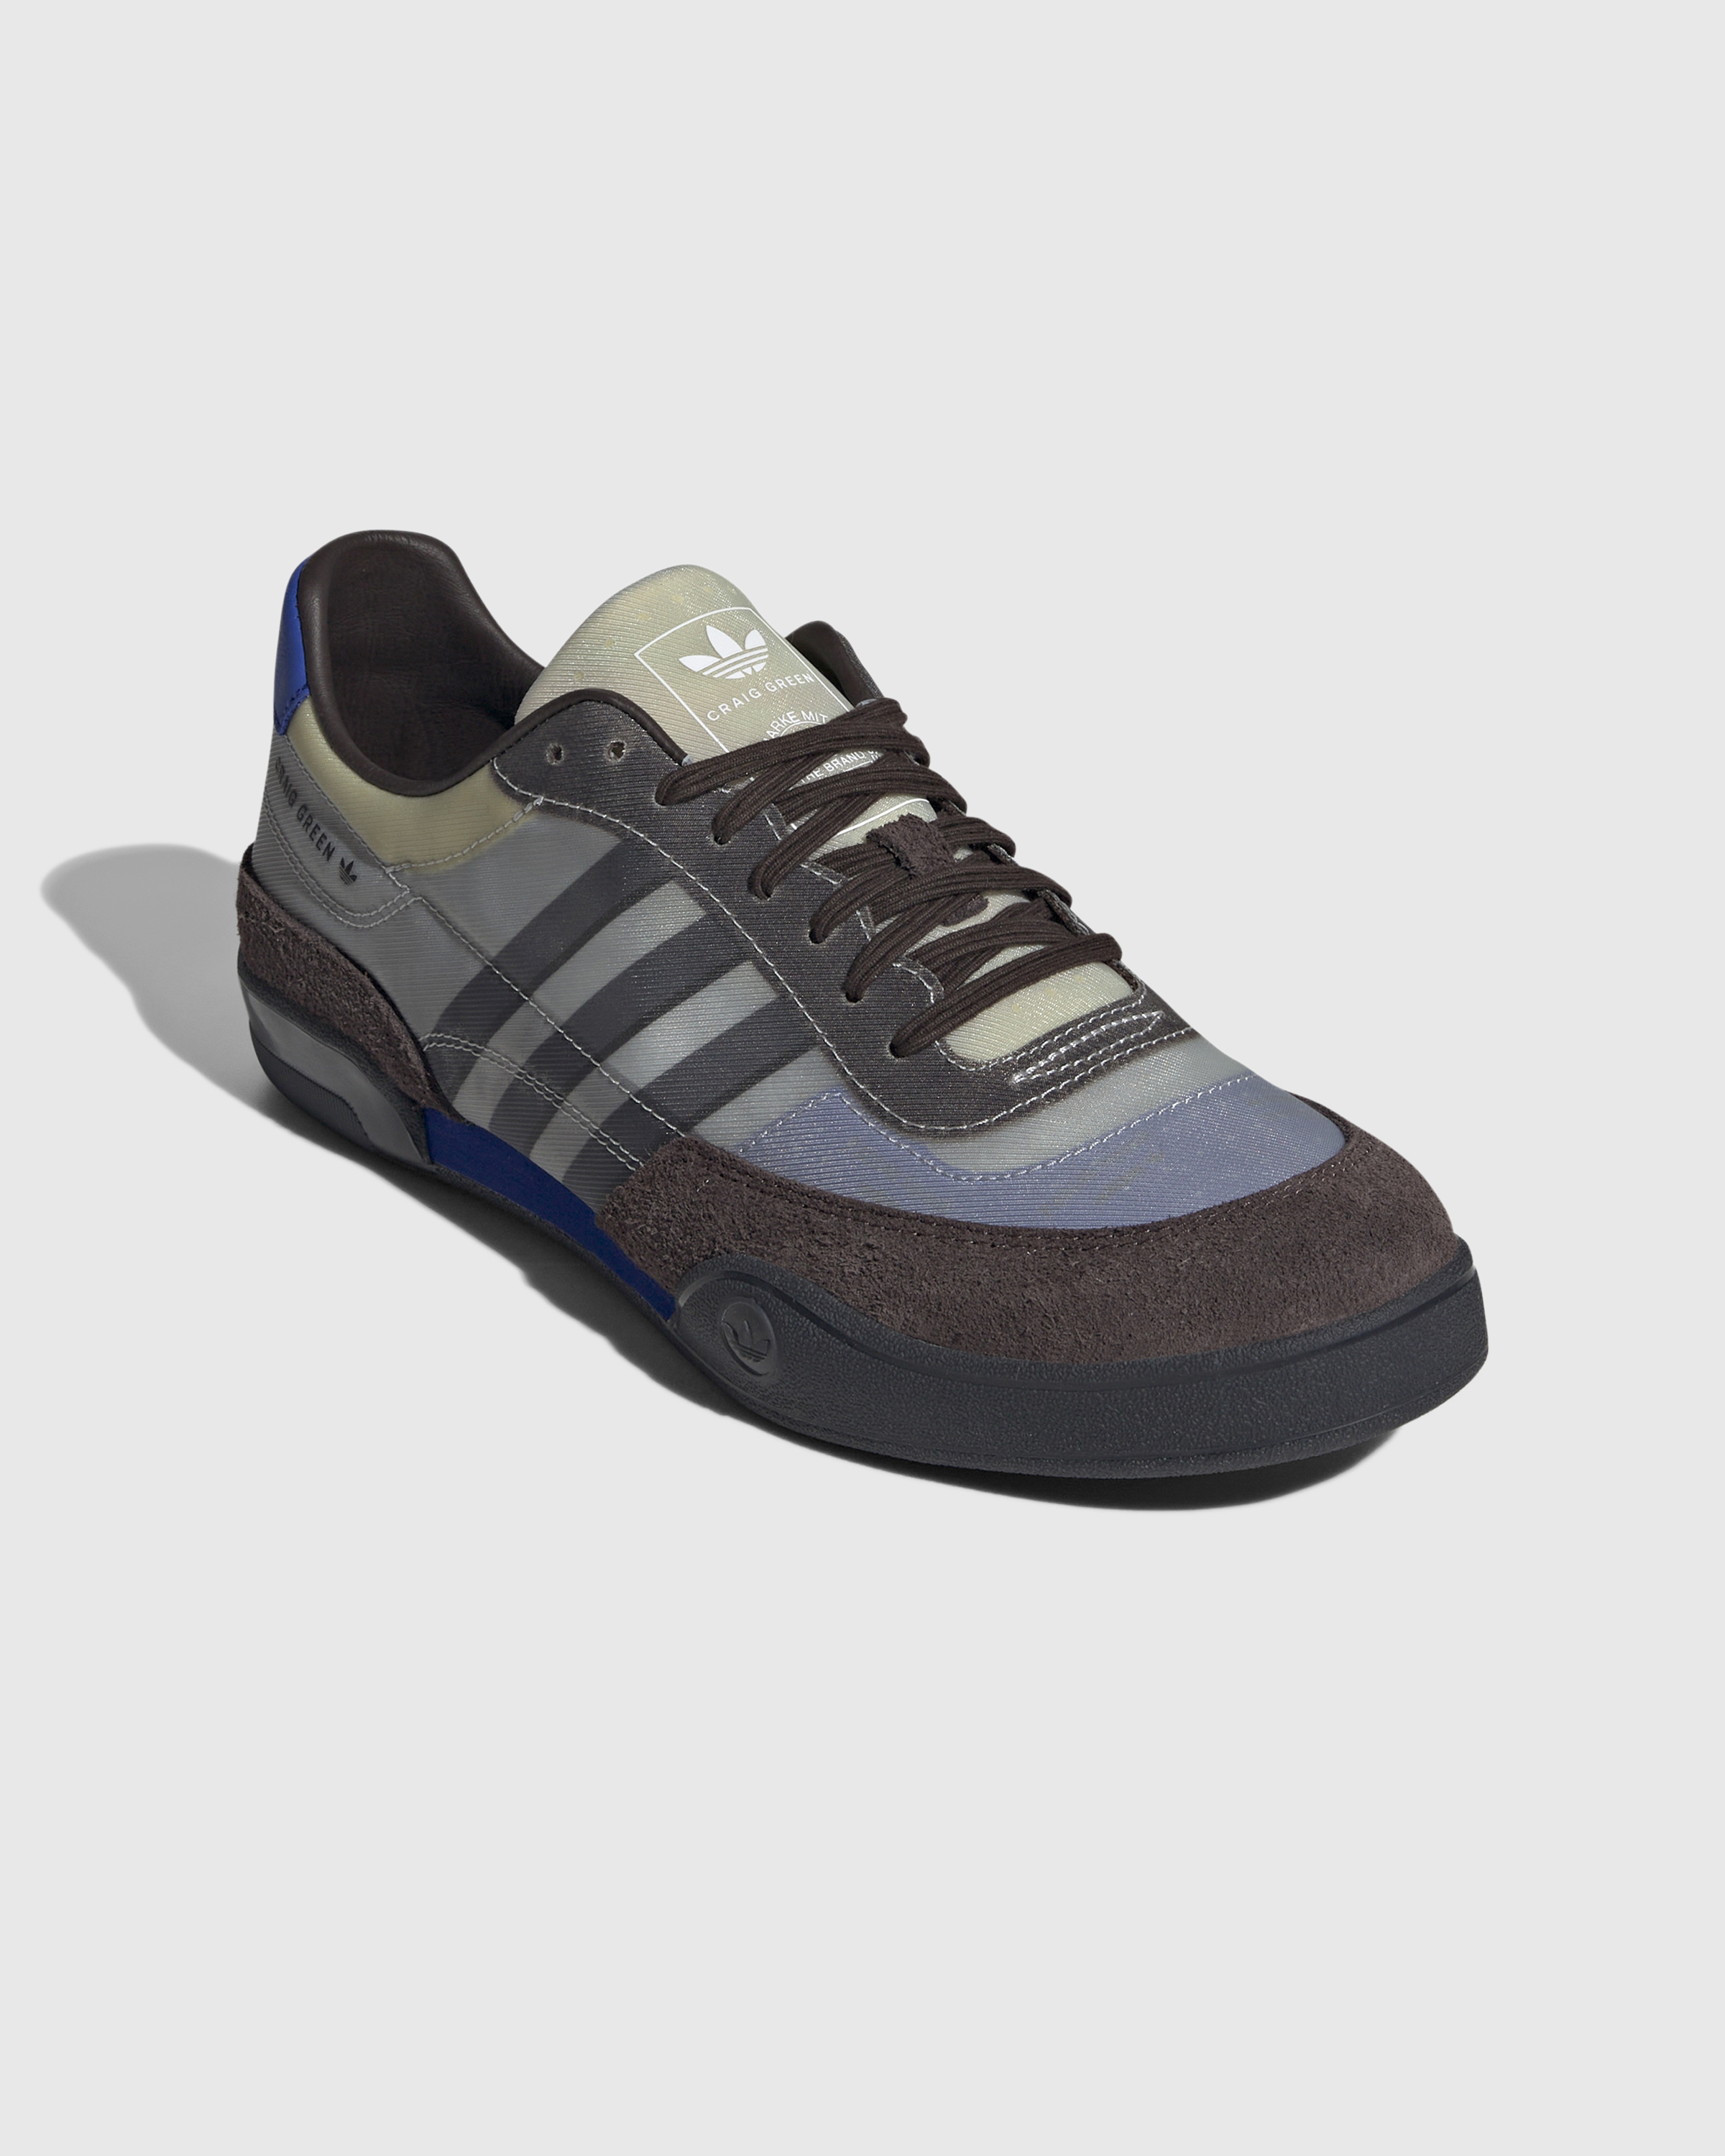 Adidas x Craig Green – Squash Polta Akh Multi/Core White/Gum - Low Top Sneakers - Multi - Image 3